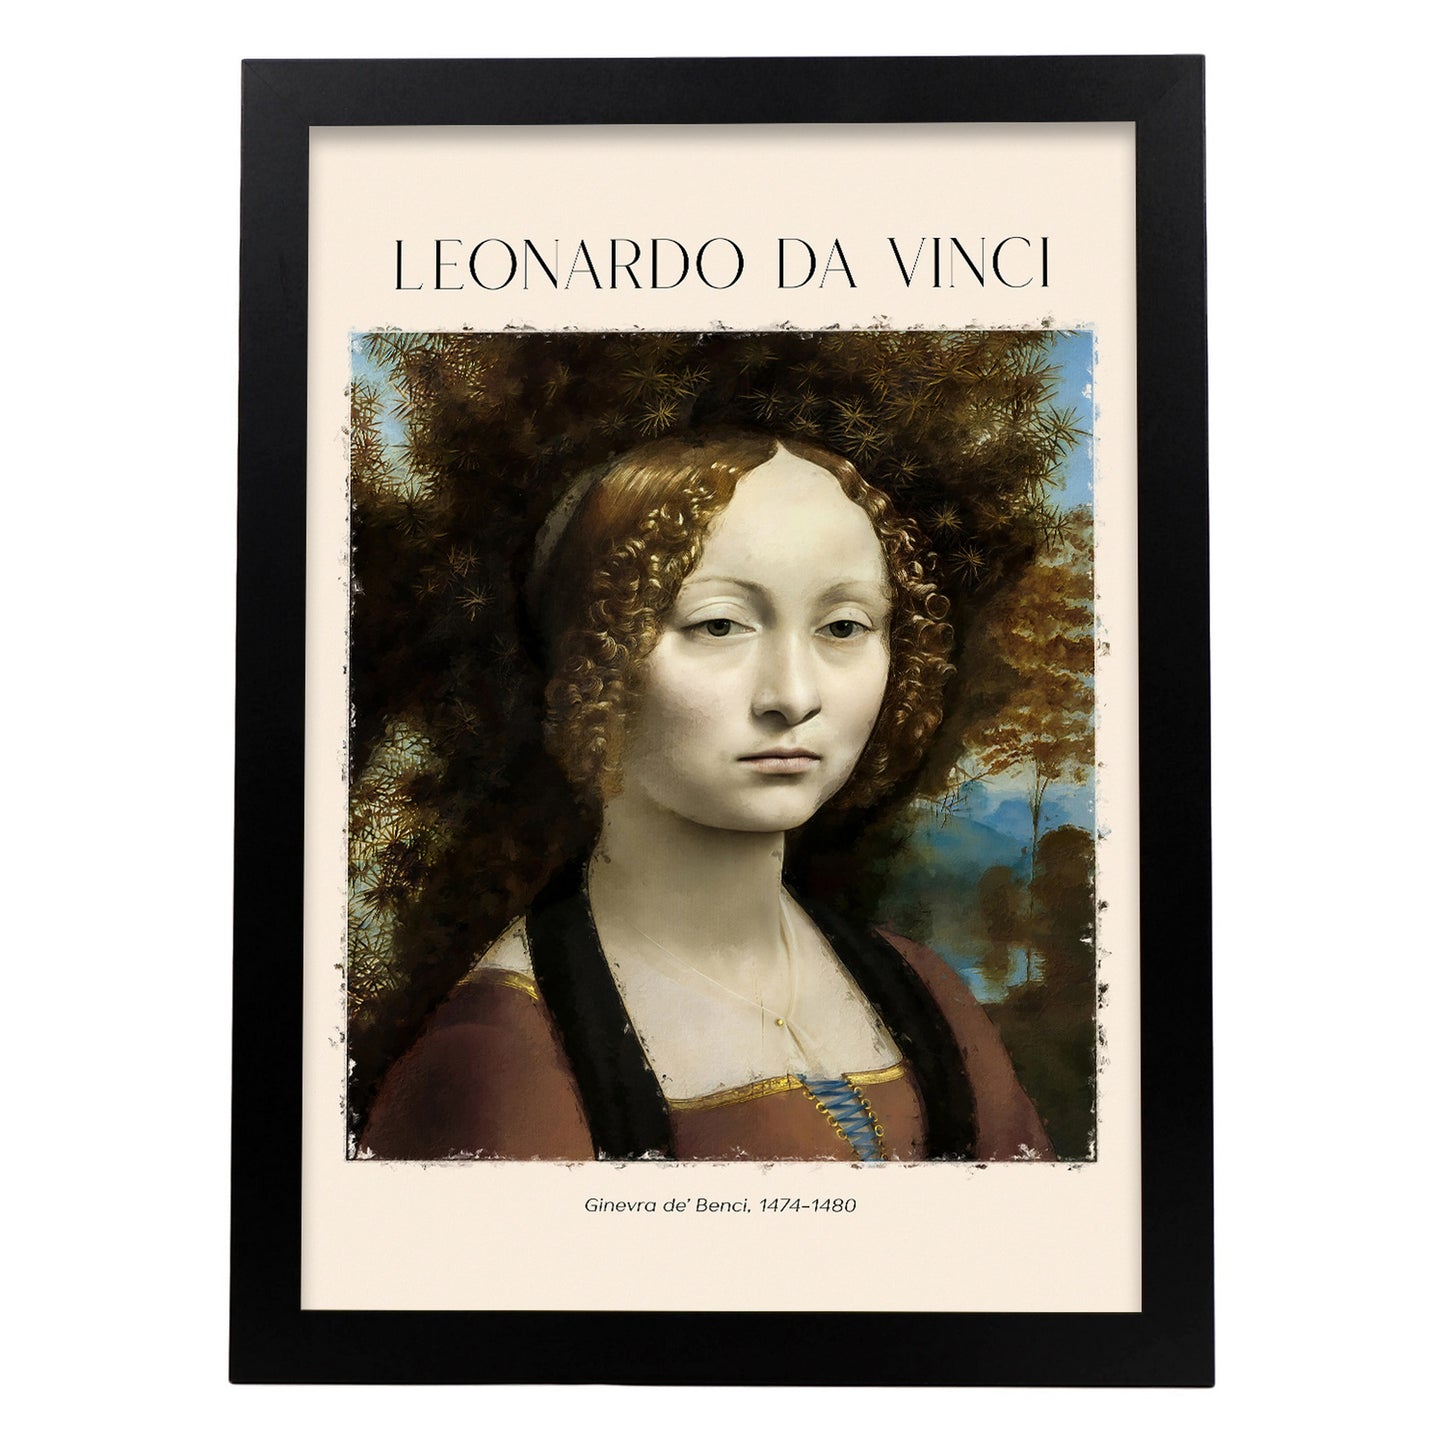 Lámina de Ginevra de Benci inspirada en Leonardo da Vinci